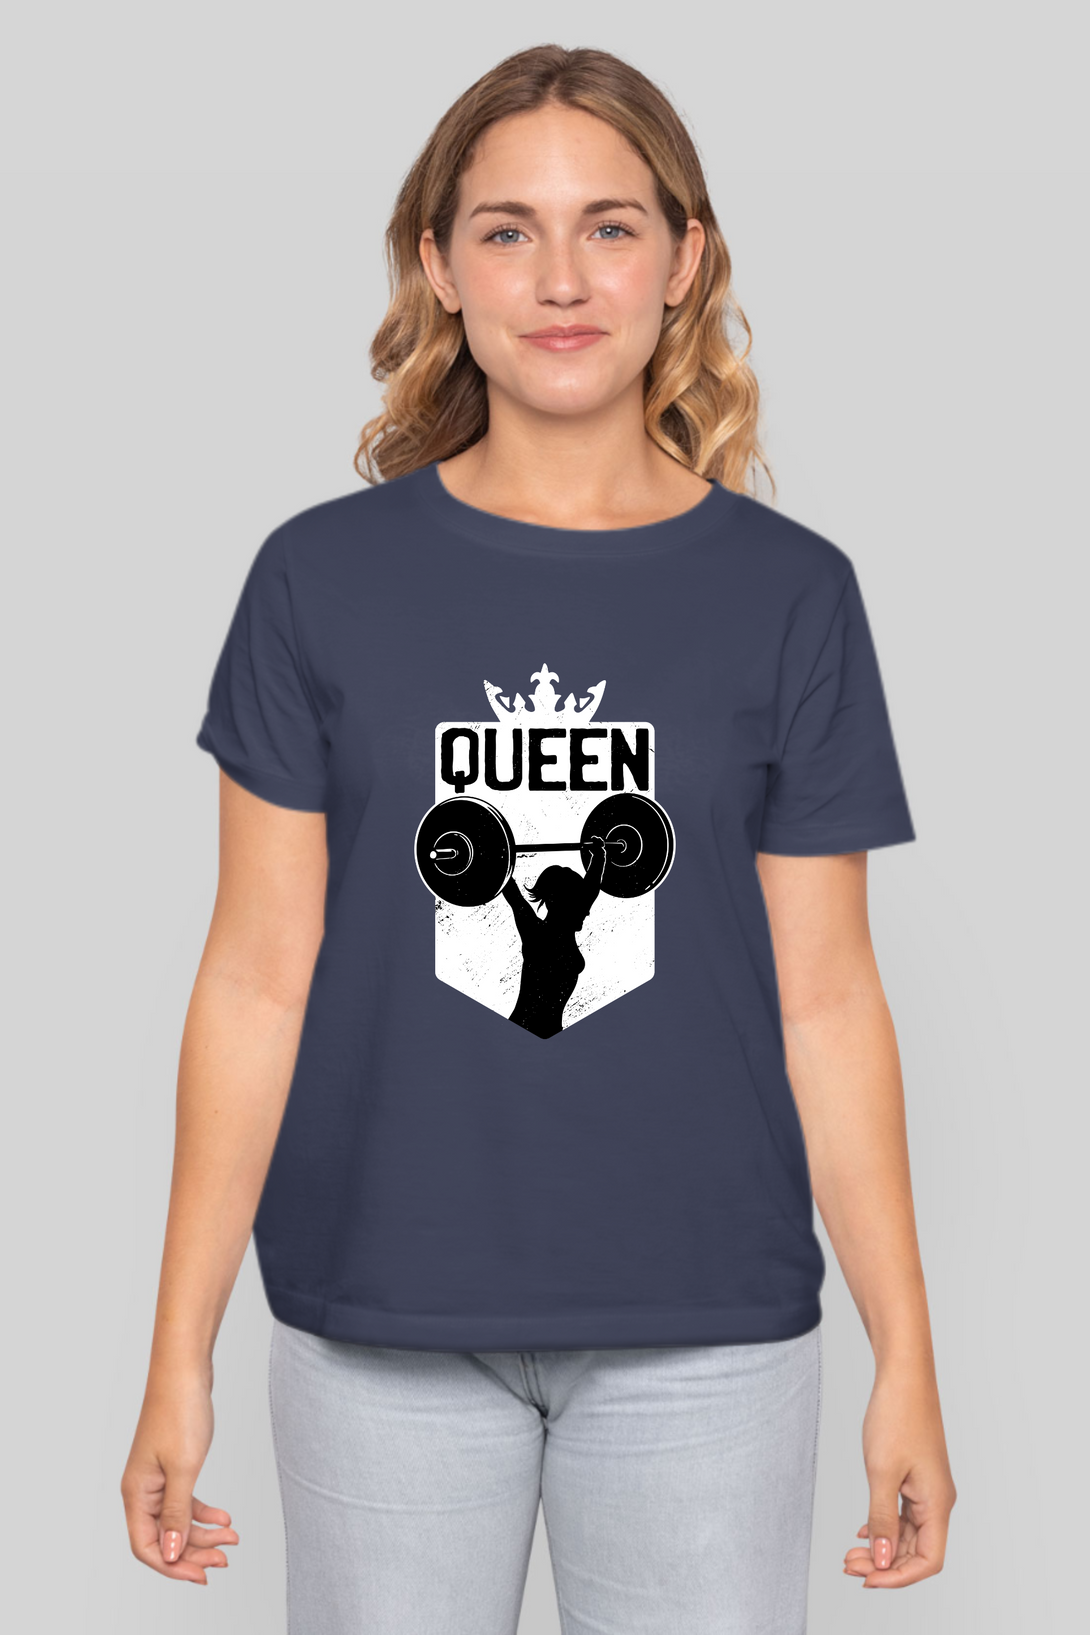 Queen Printed T-Shirt For Women - WowWaves - 10